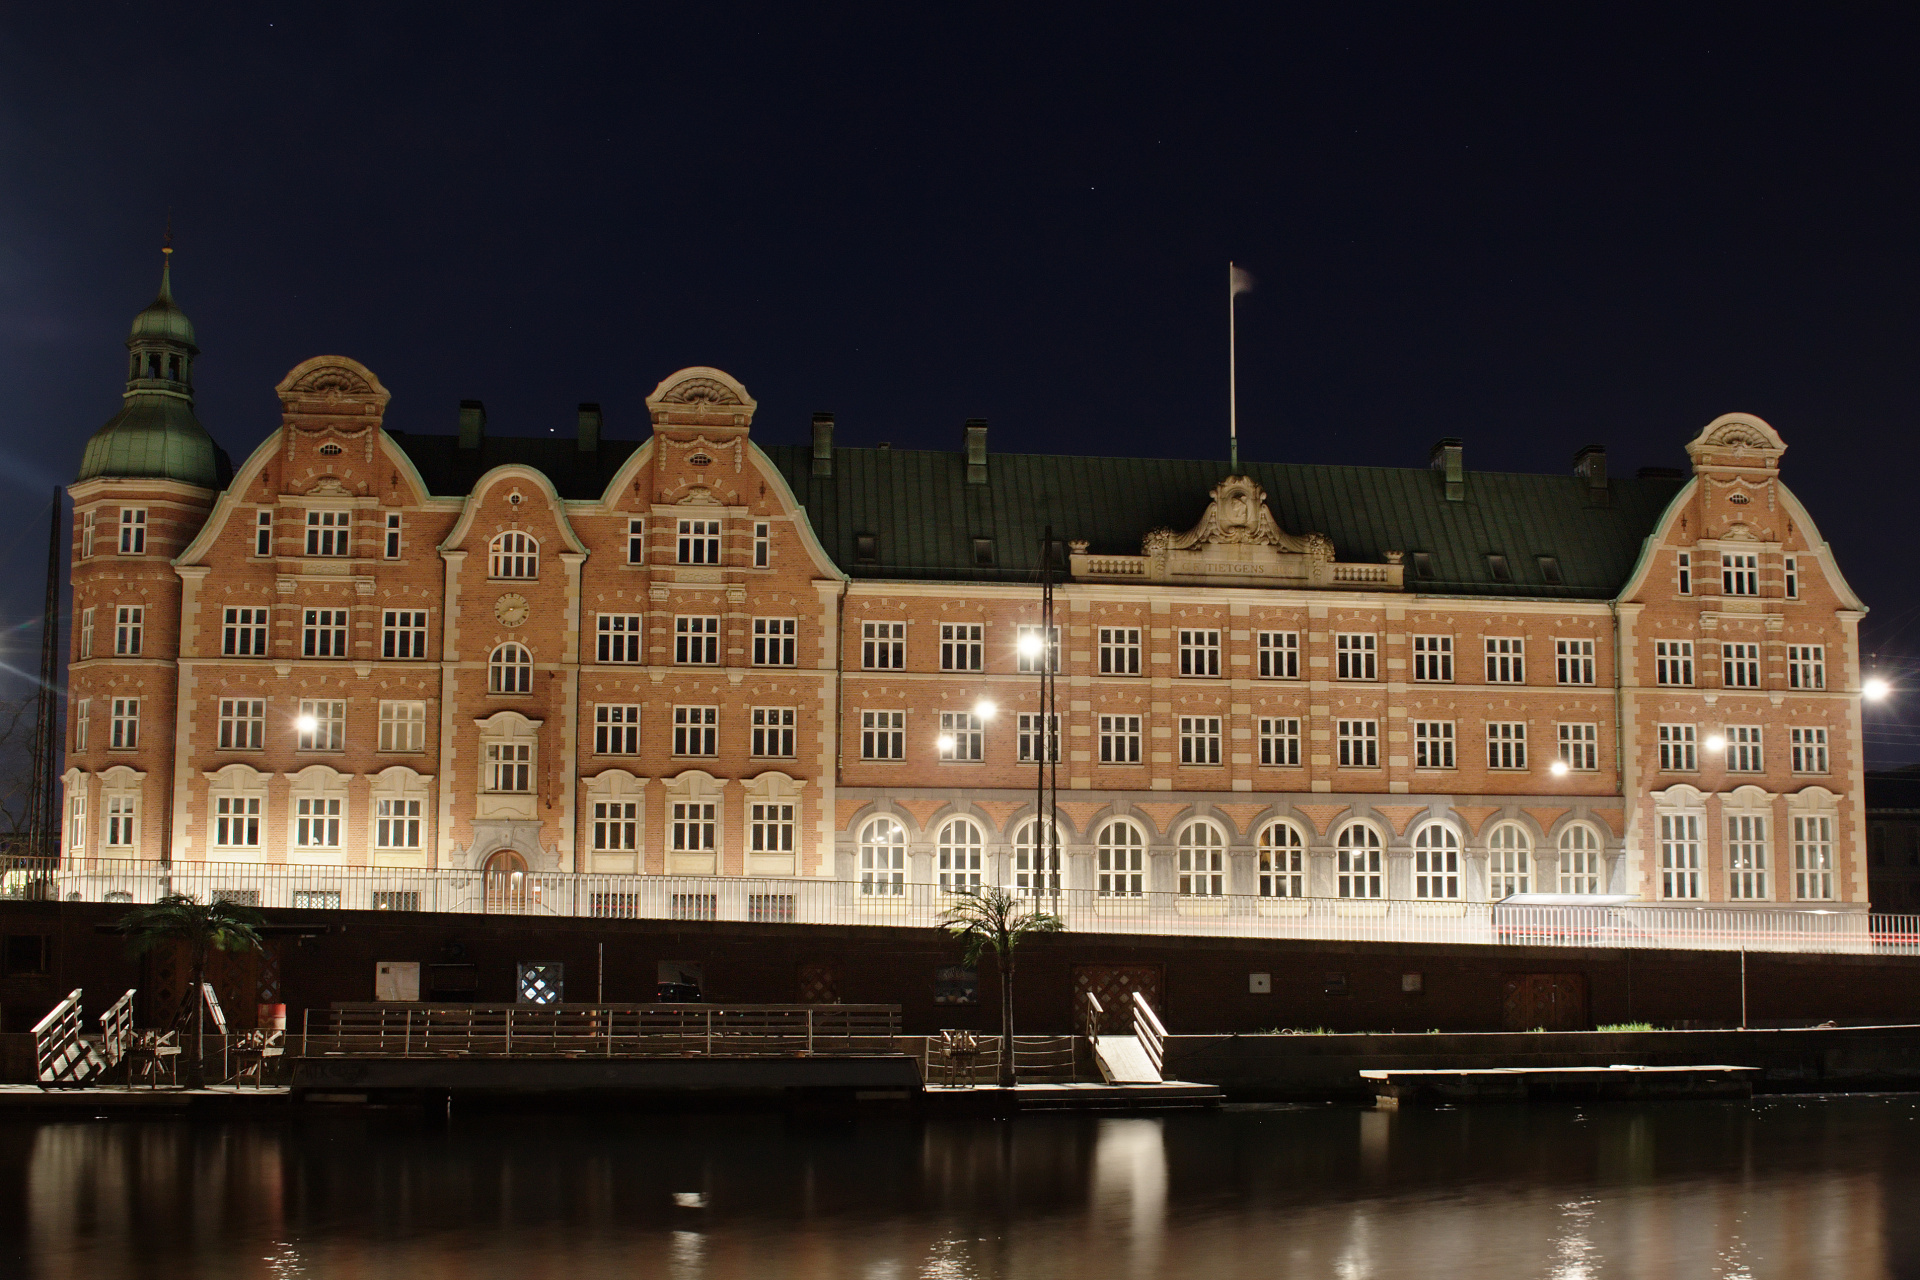 Tietgen's House (Podróże » Kopenhaga » Miasto w nocy)